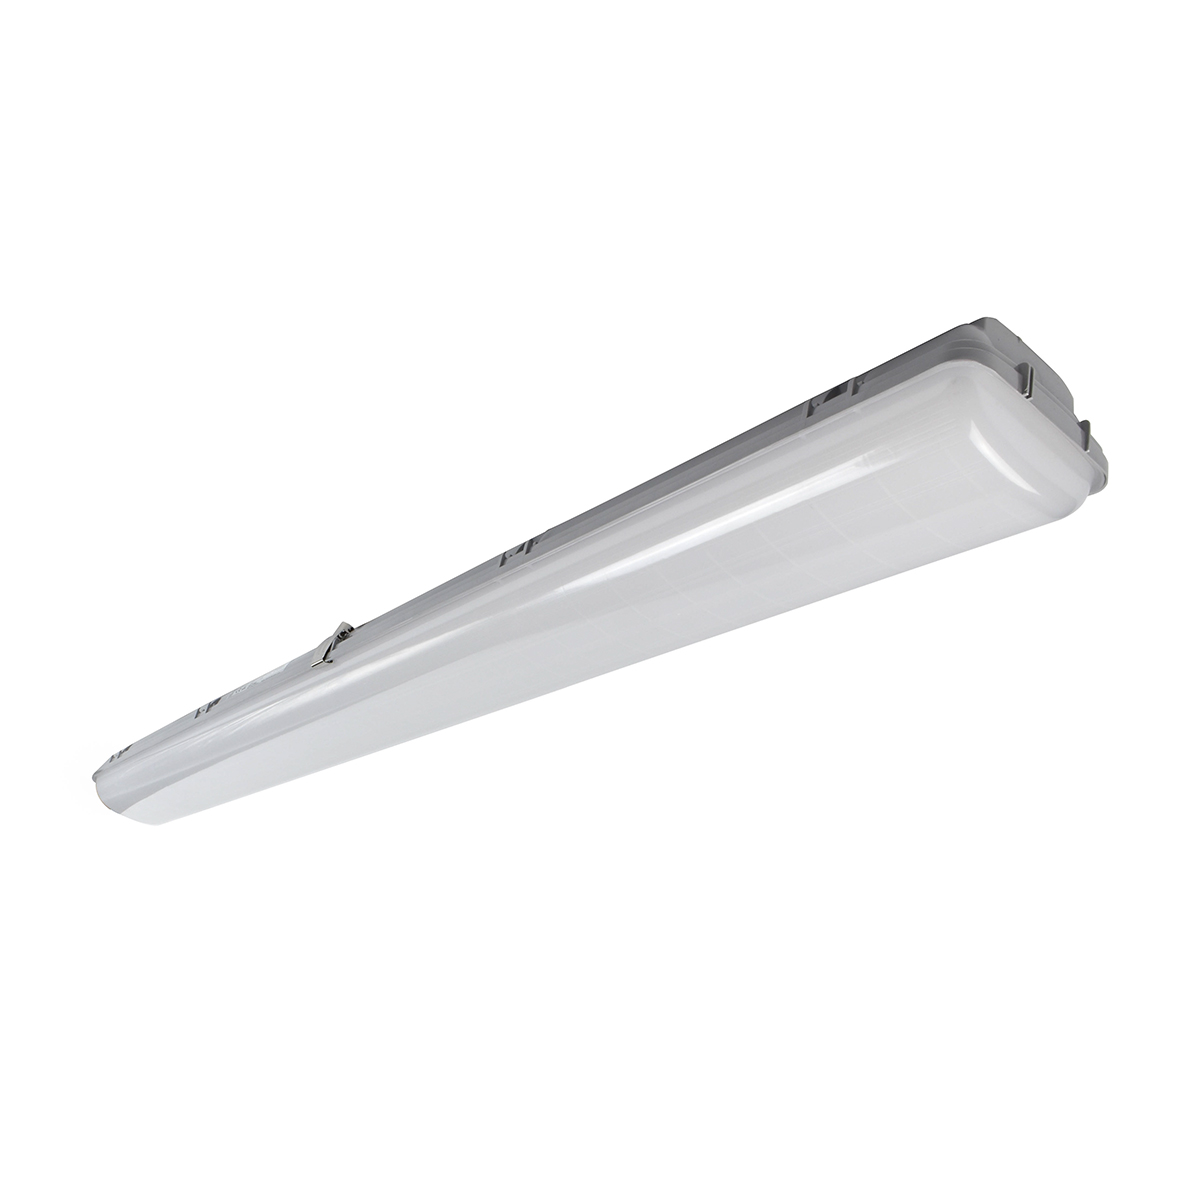 Commercial Lighting - iBright-Vapor-Proof-Fixture